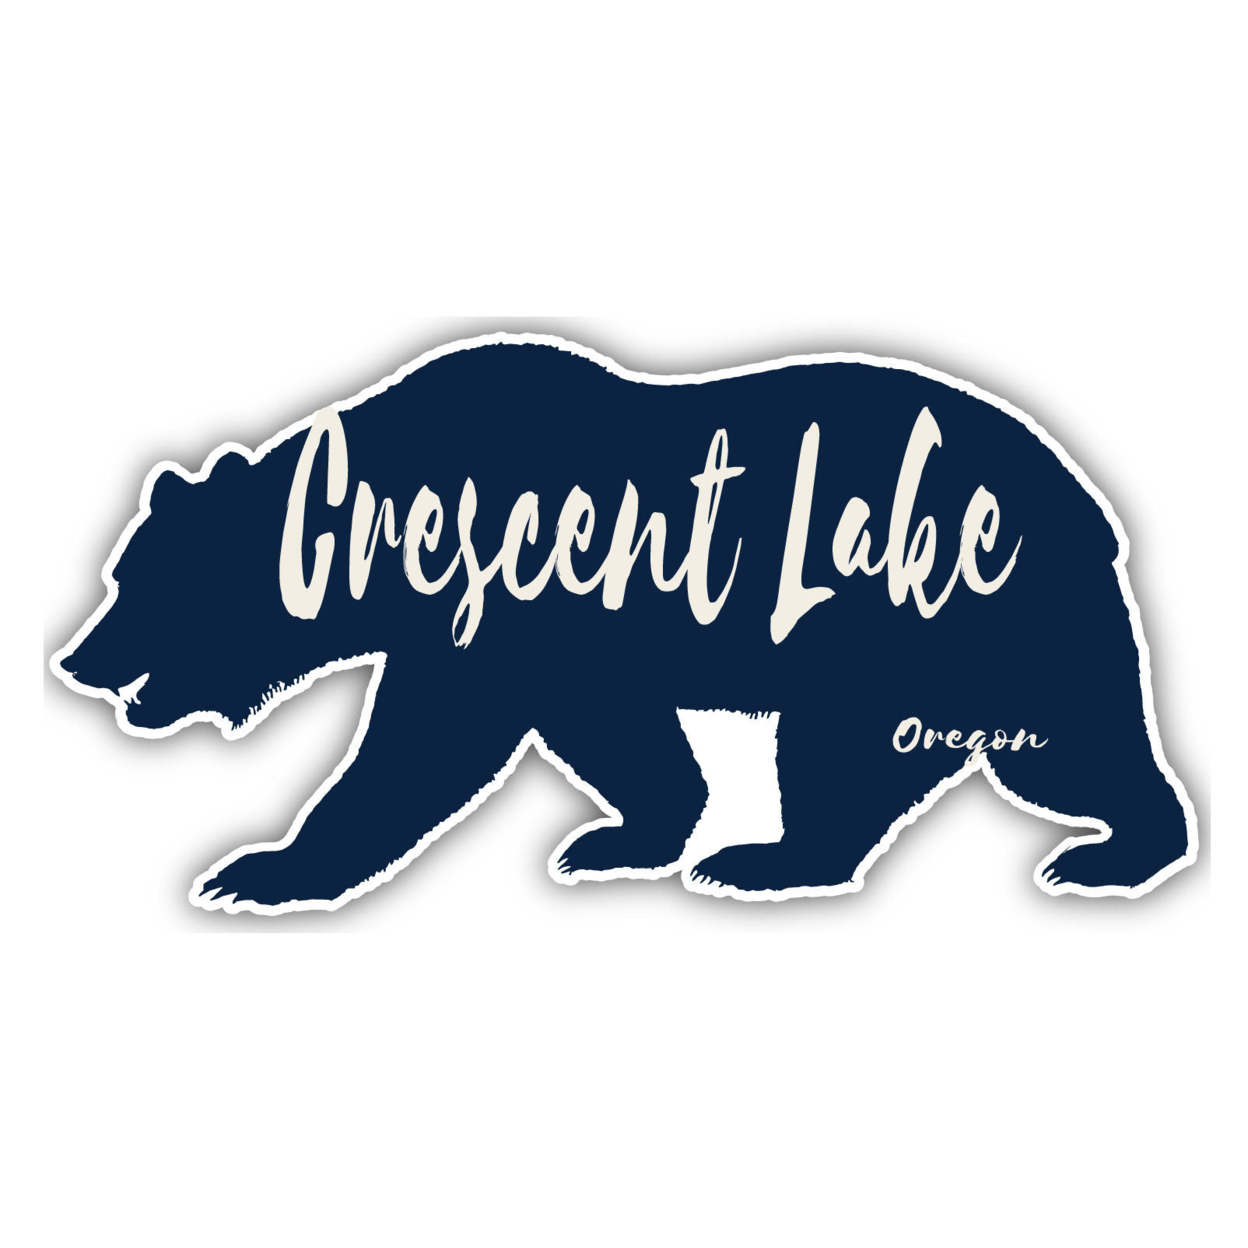 Crescent Lake Oregon Souvenir Decorative Stickers (Choose Theme And Size) - Single Unit, 8-Inch, Tent